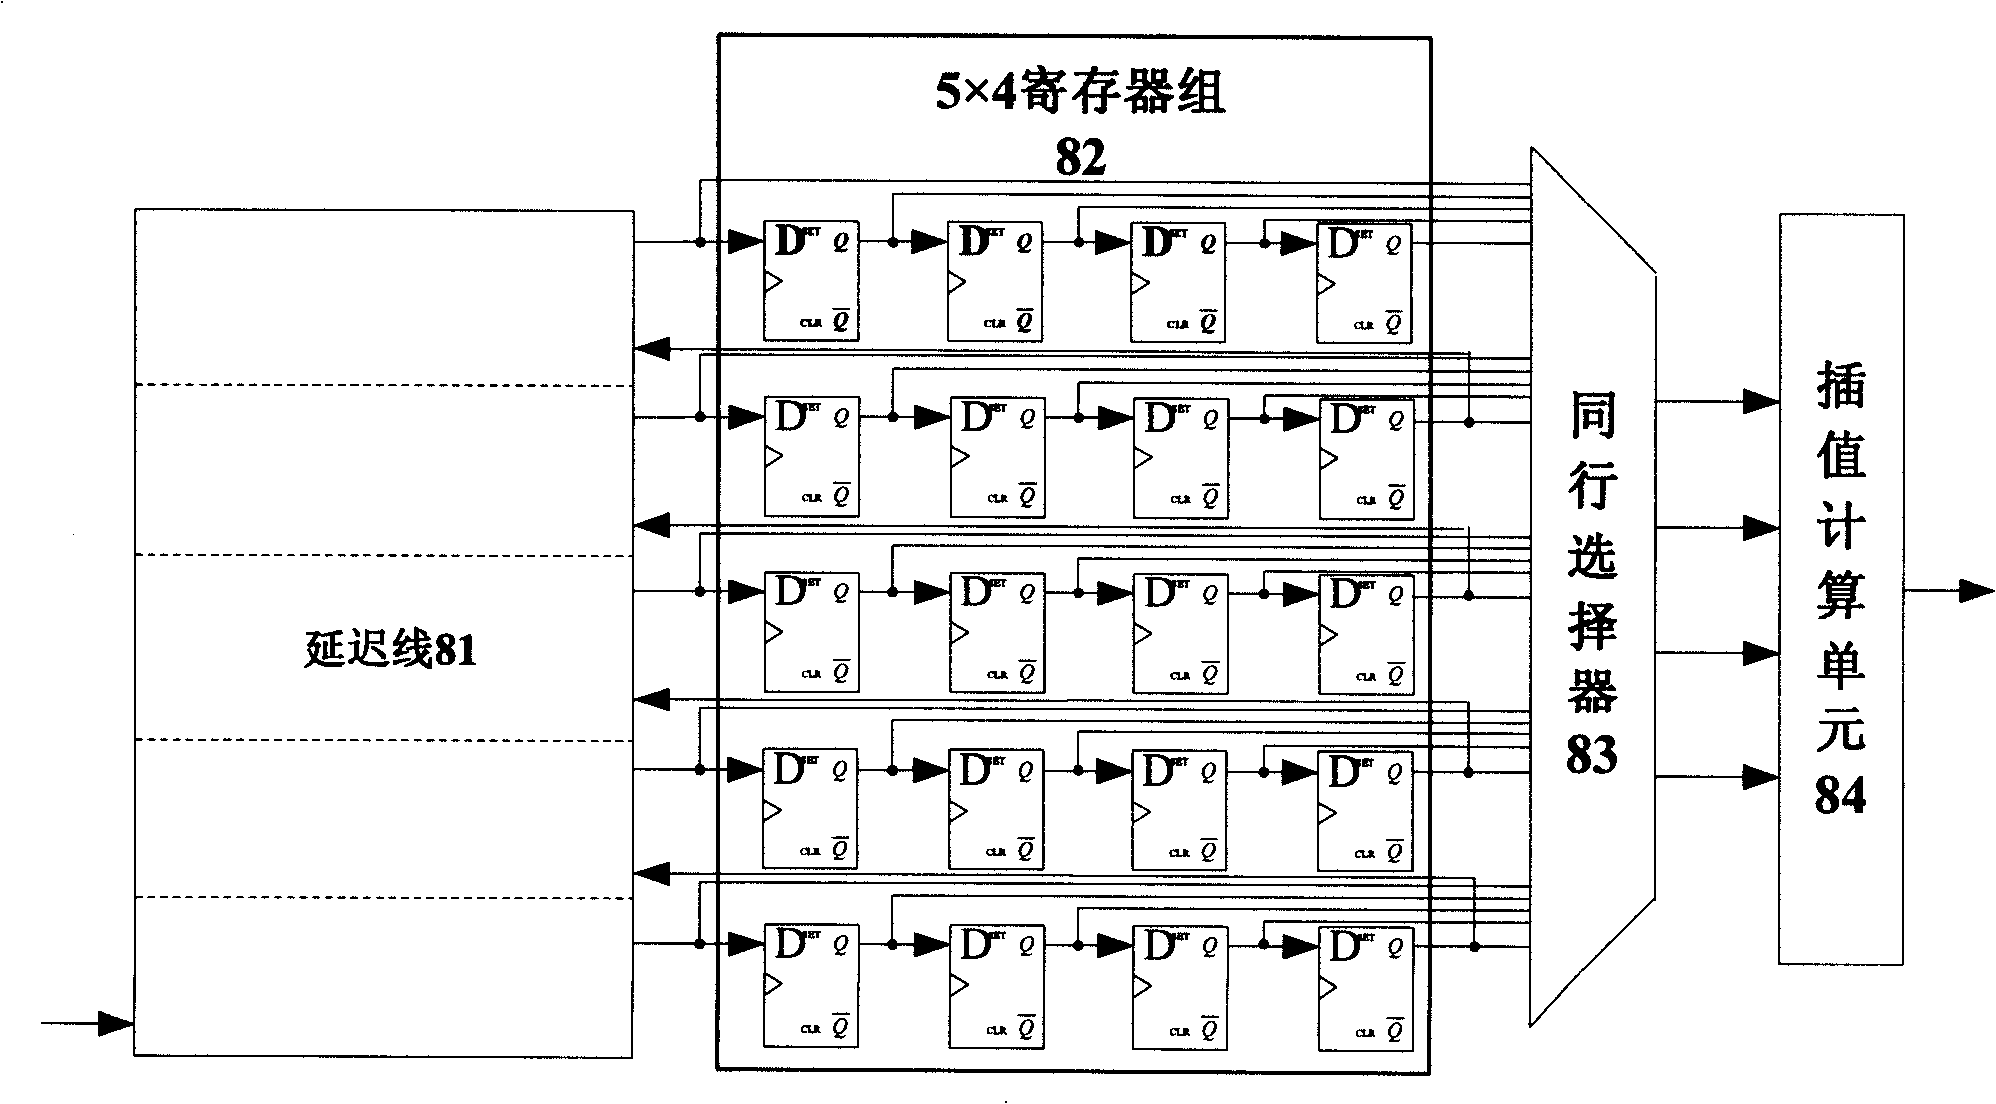 Image rotating VLSI structure based on cubic translation algorithm